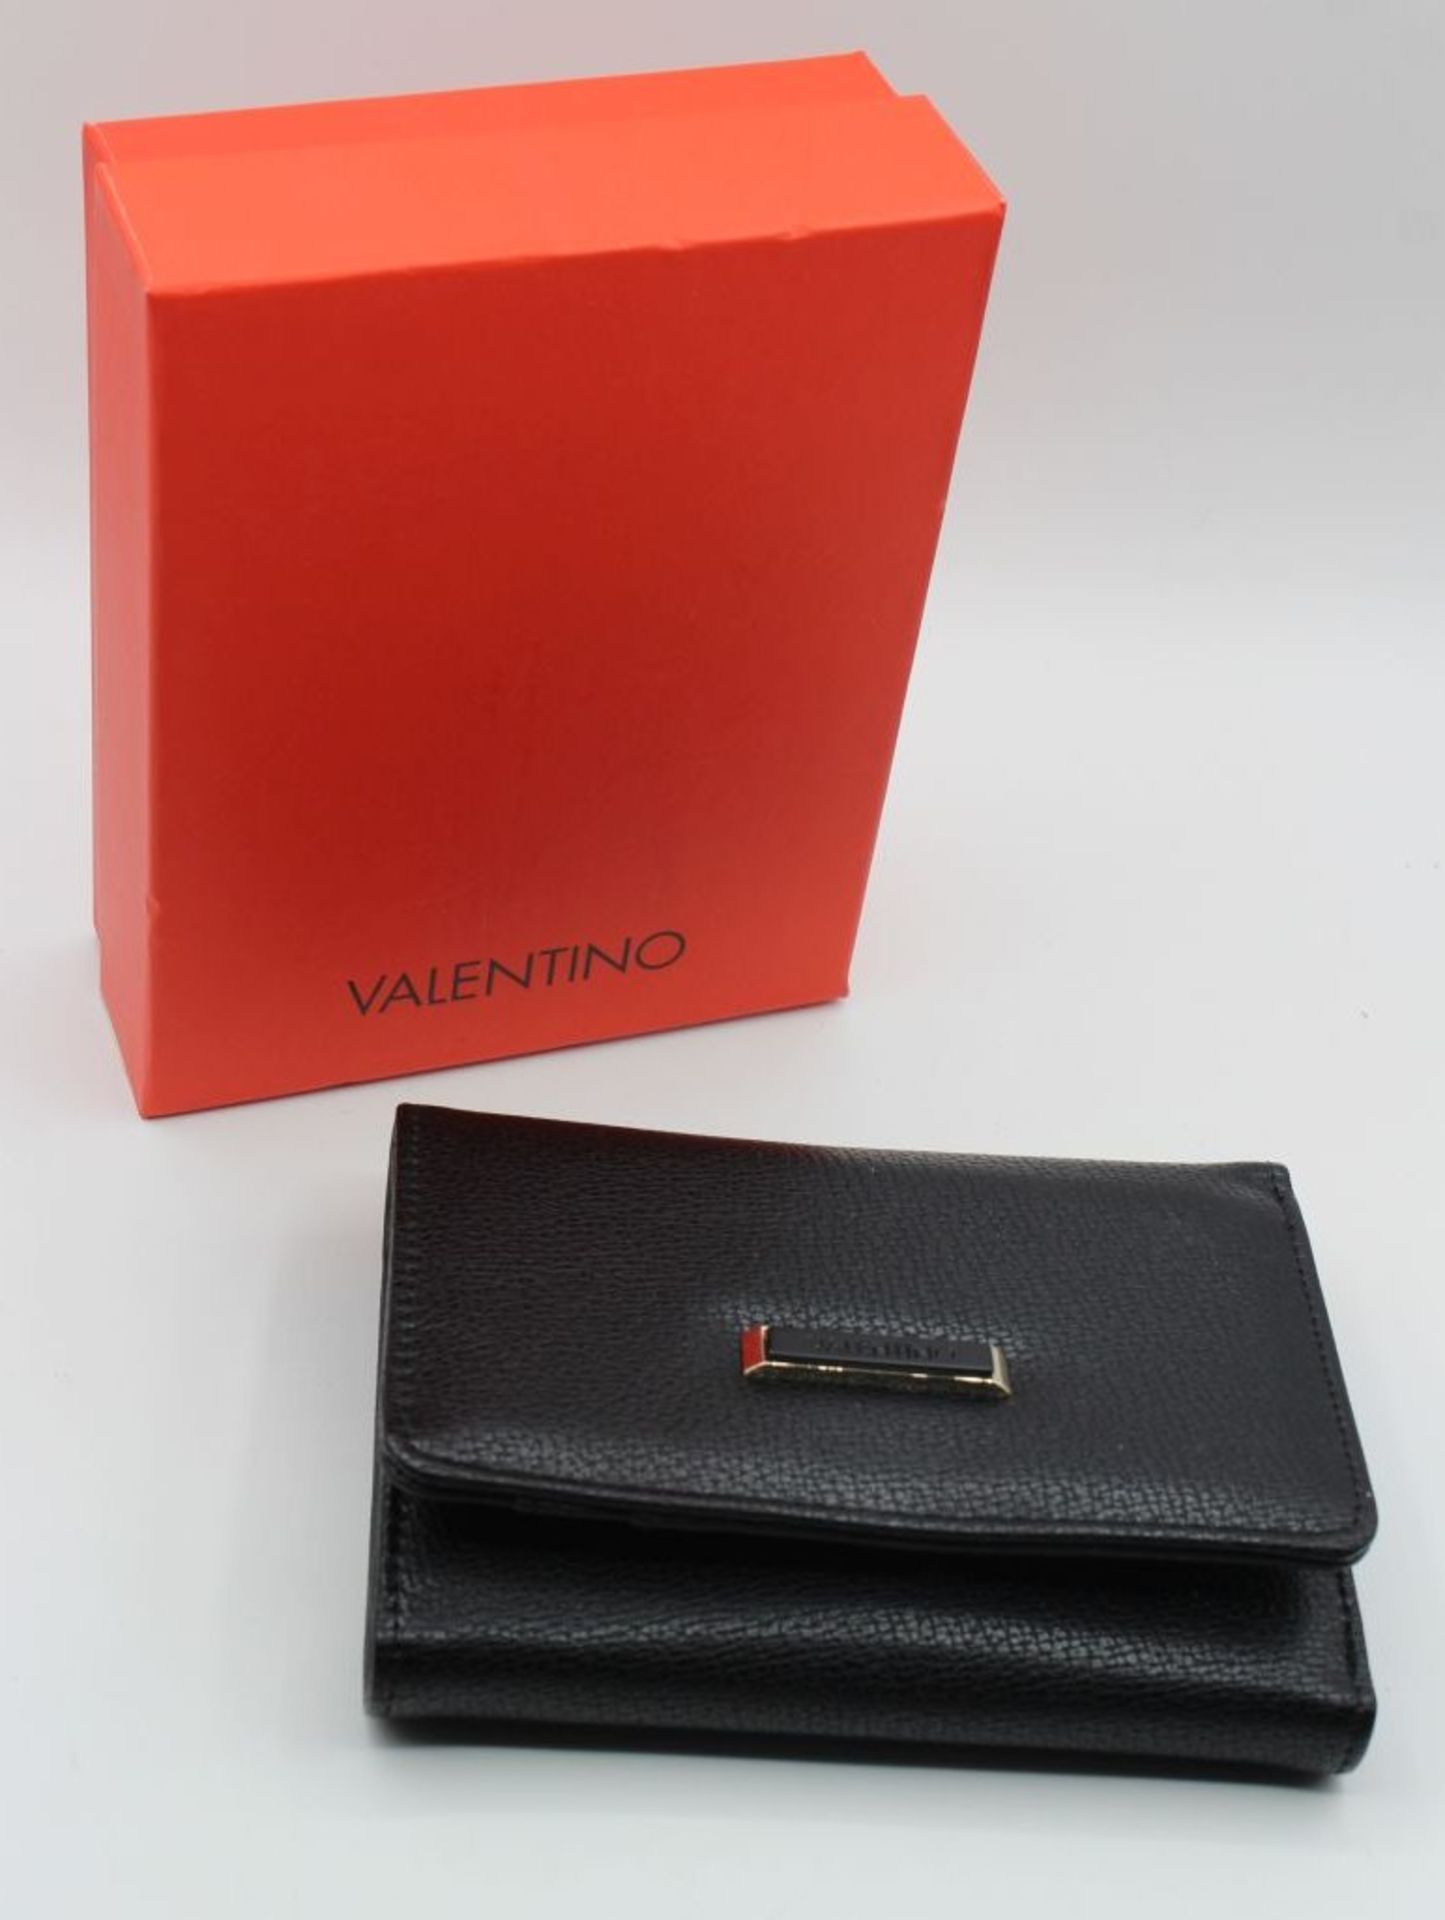 neuwertige Geldbörse "Valentino", orig. Karton, 11 x 14,5cm.